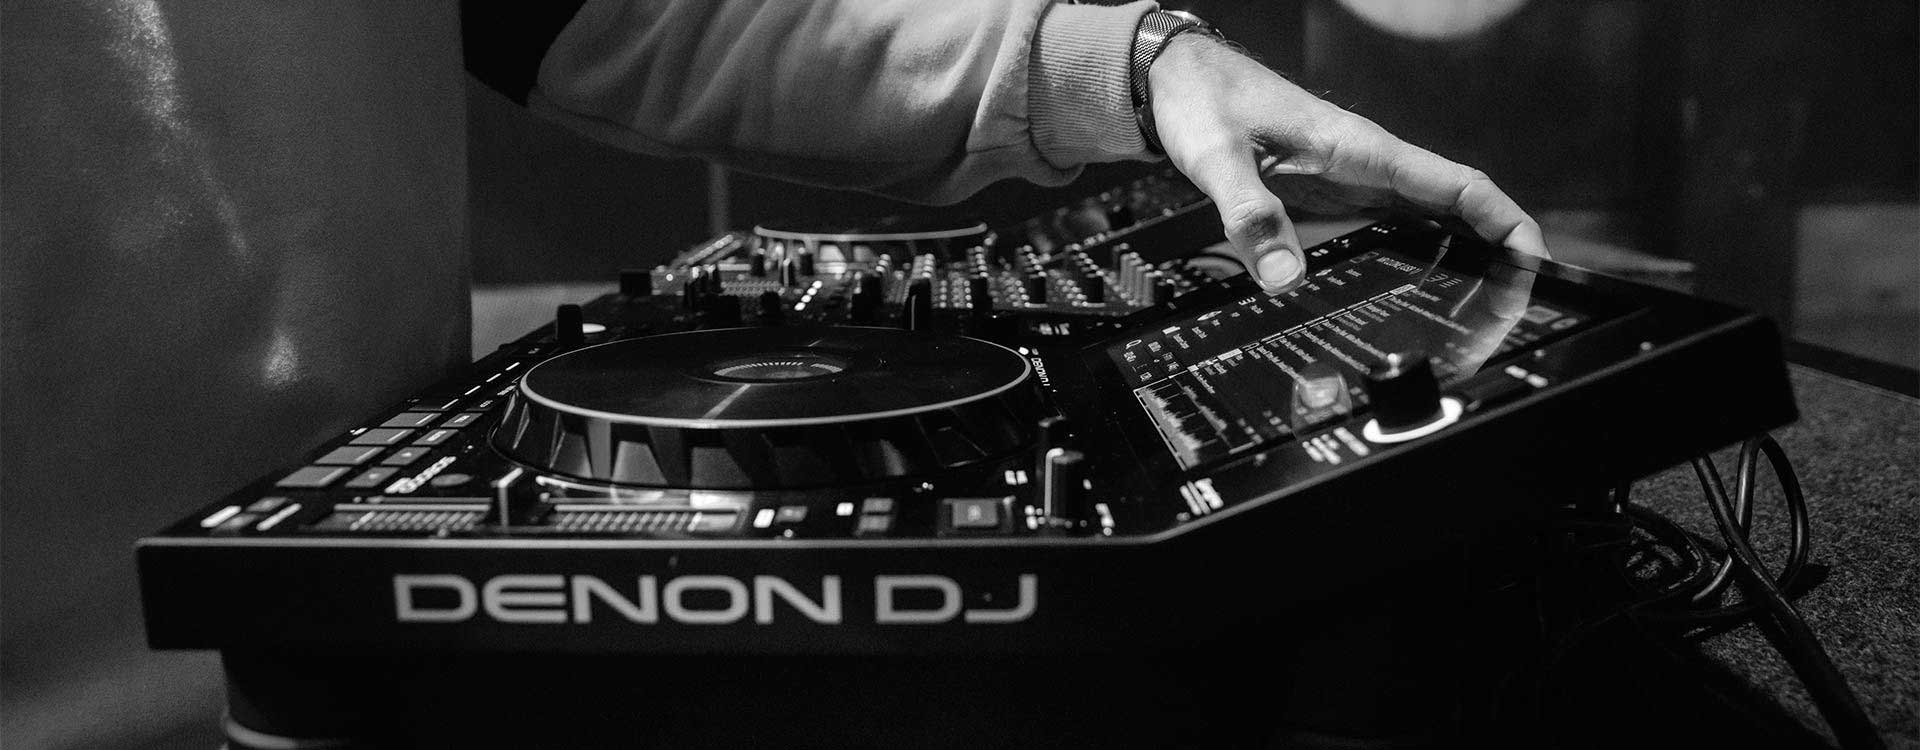 DENON DJ. Abraza el futuro - Siluj